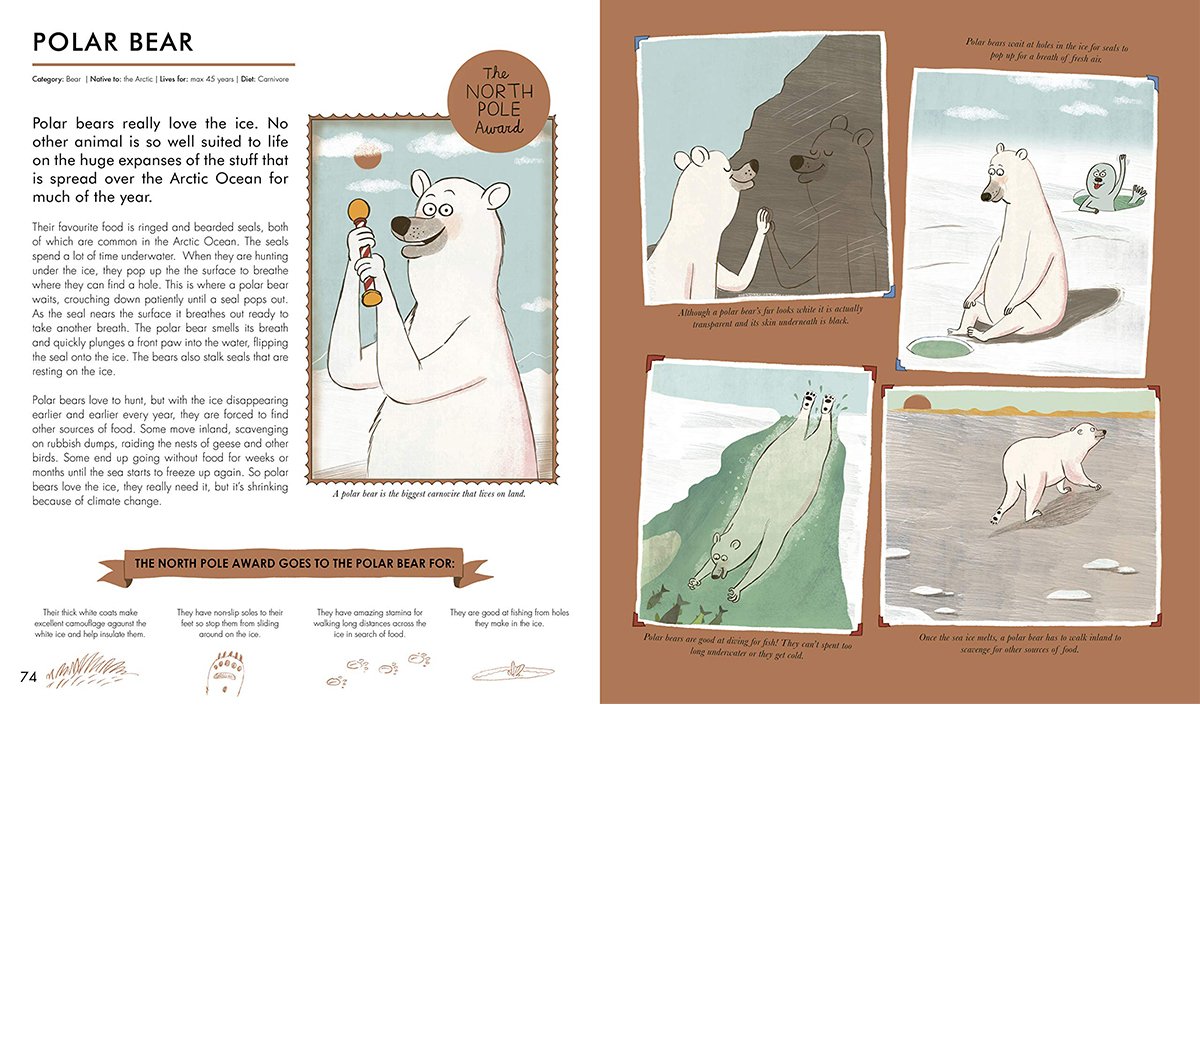 tor-freeman-polar-bear-facts-illustration.jpg